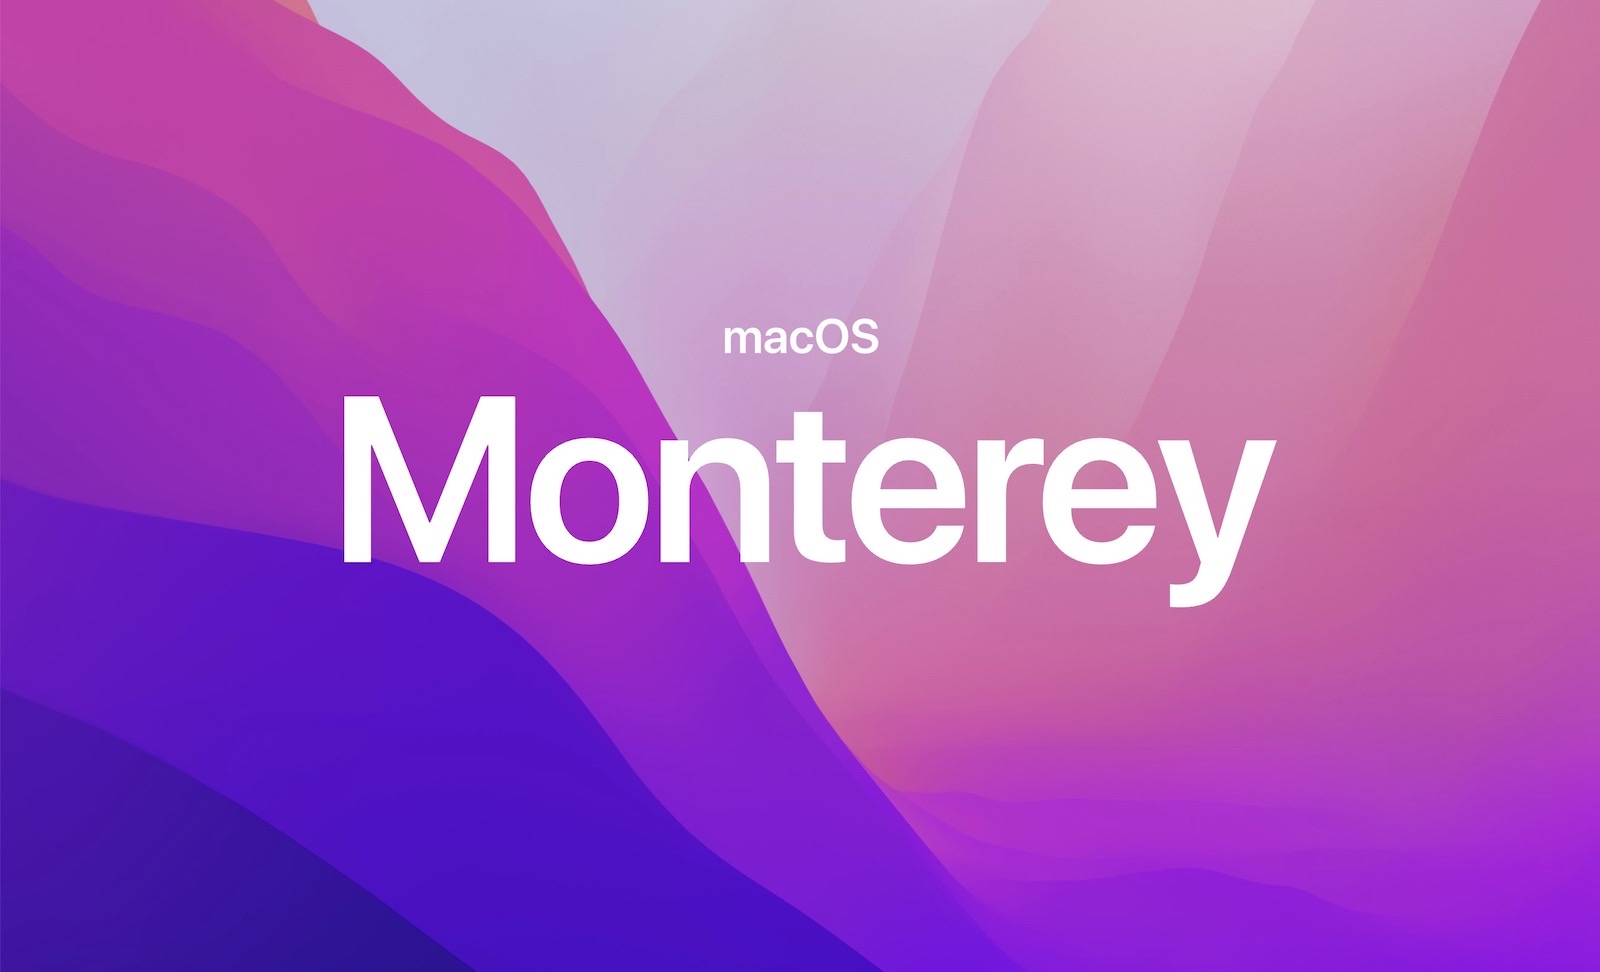 macos-monterey-official-release.jpg